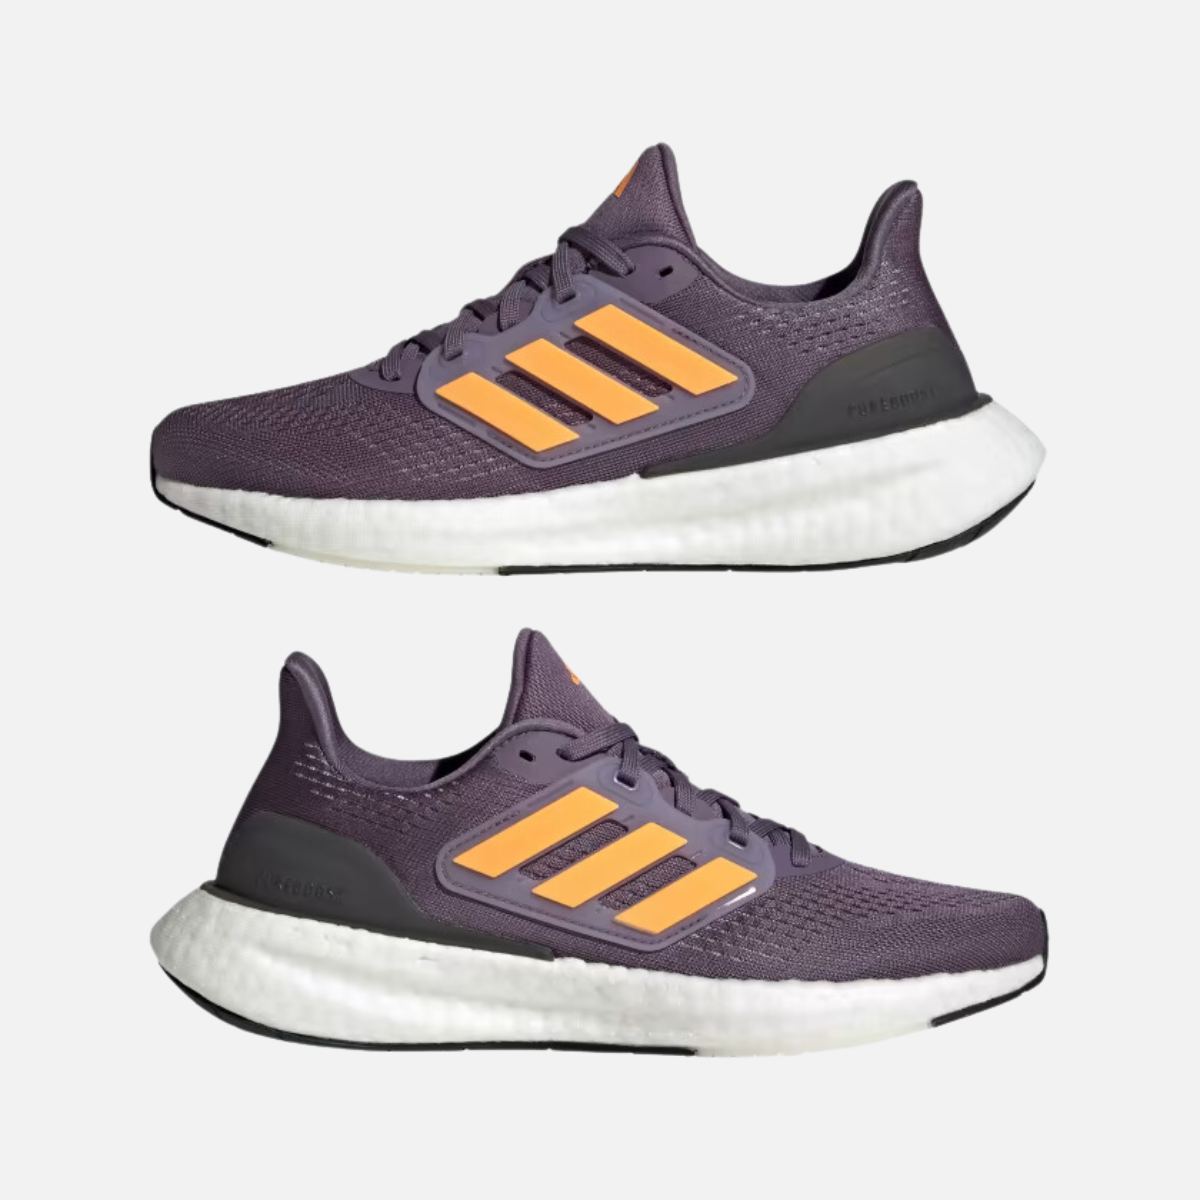 Adidas Pureboost 23 Women's Running Shoes -Shadow Violet/Flash Orange/Cloud White